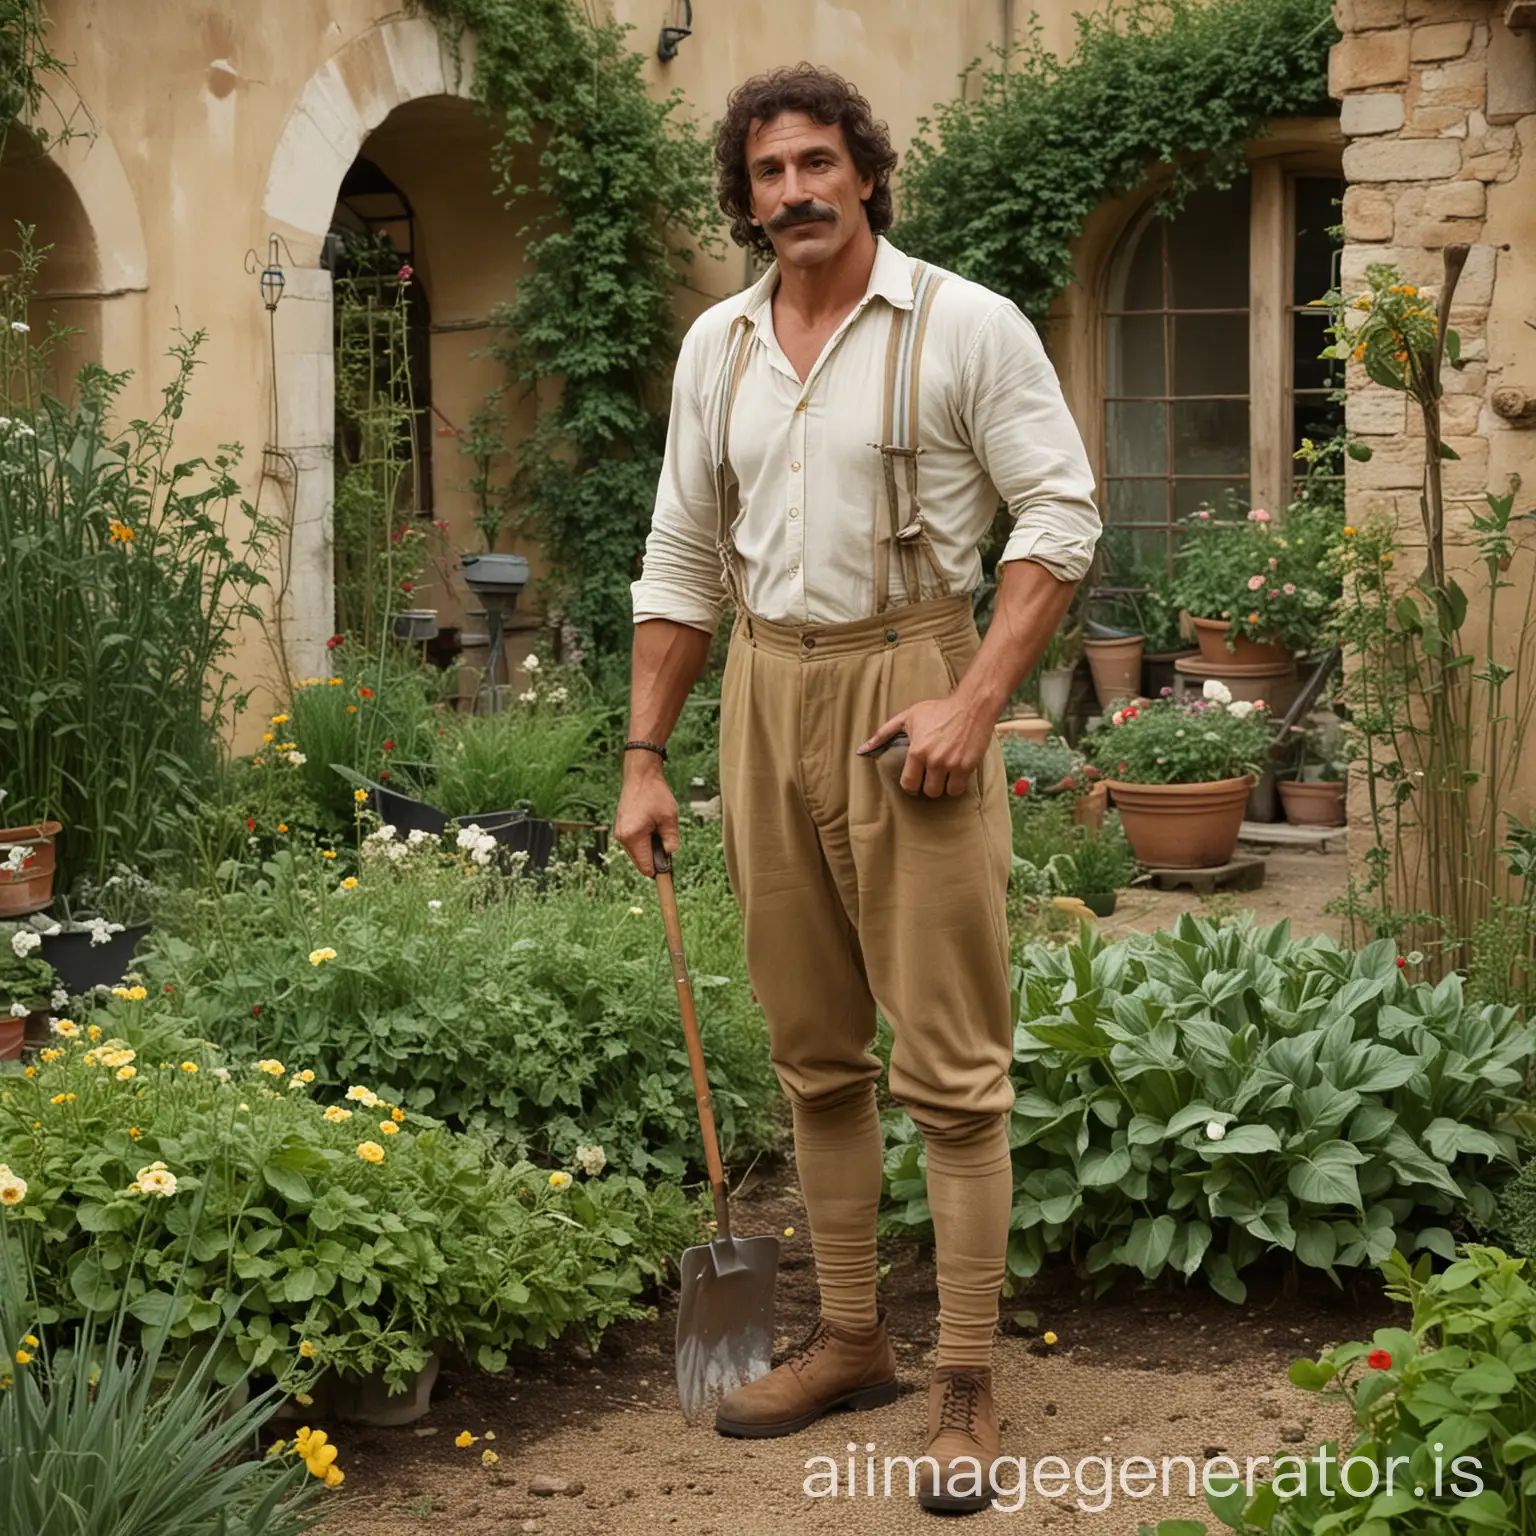 Buff-Italian-Gardener-with-a-Green-Thumb-and-Joyful-Expression